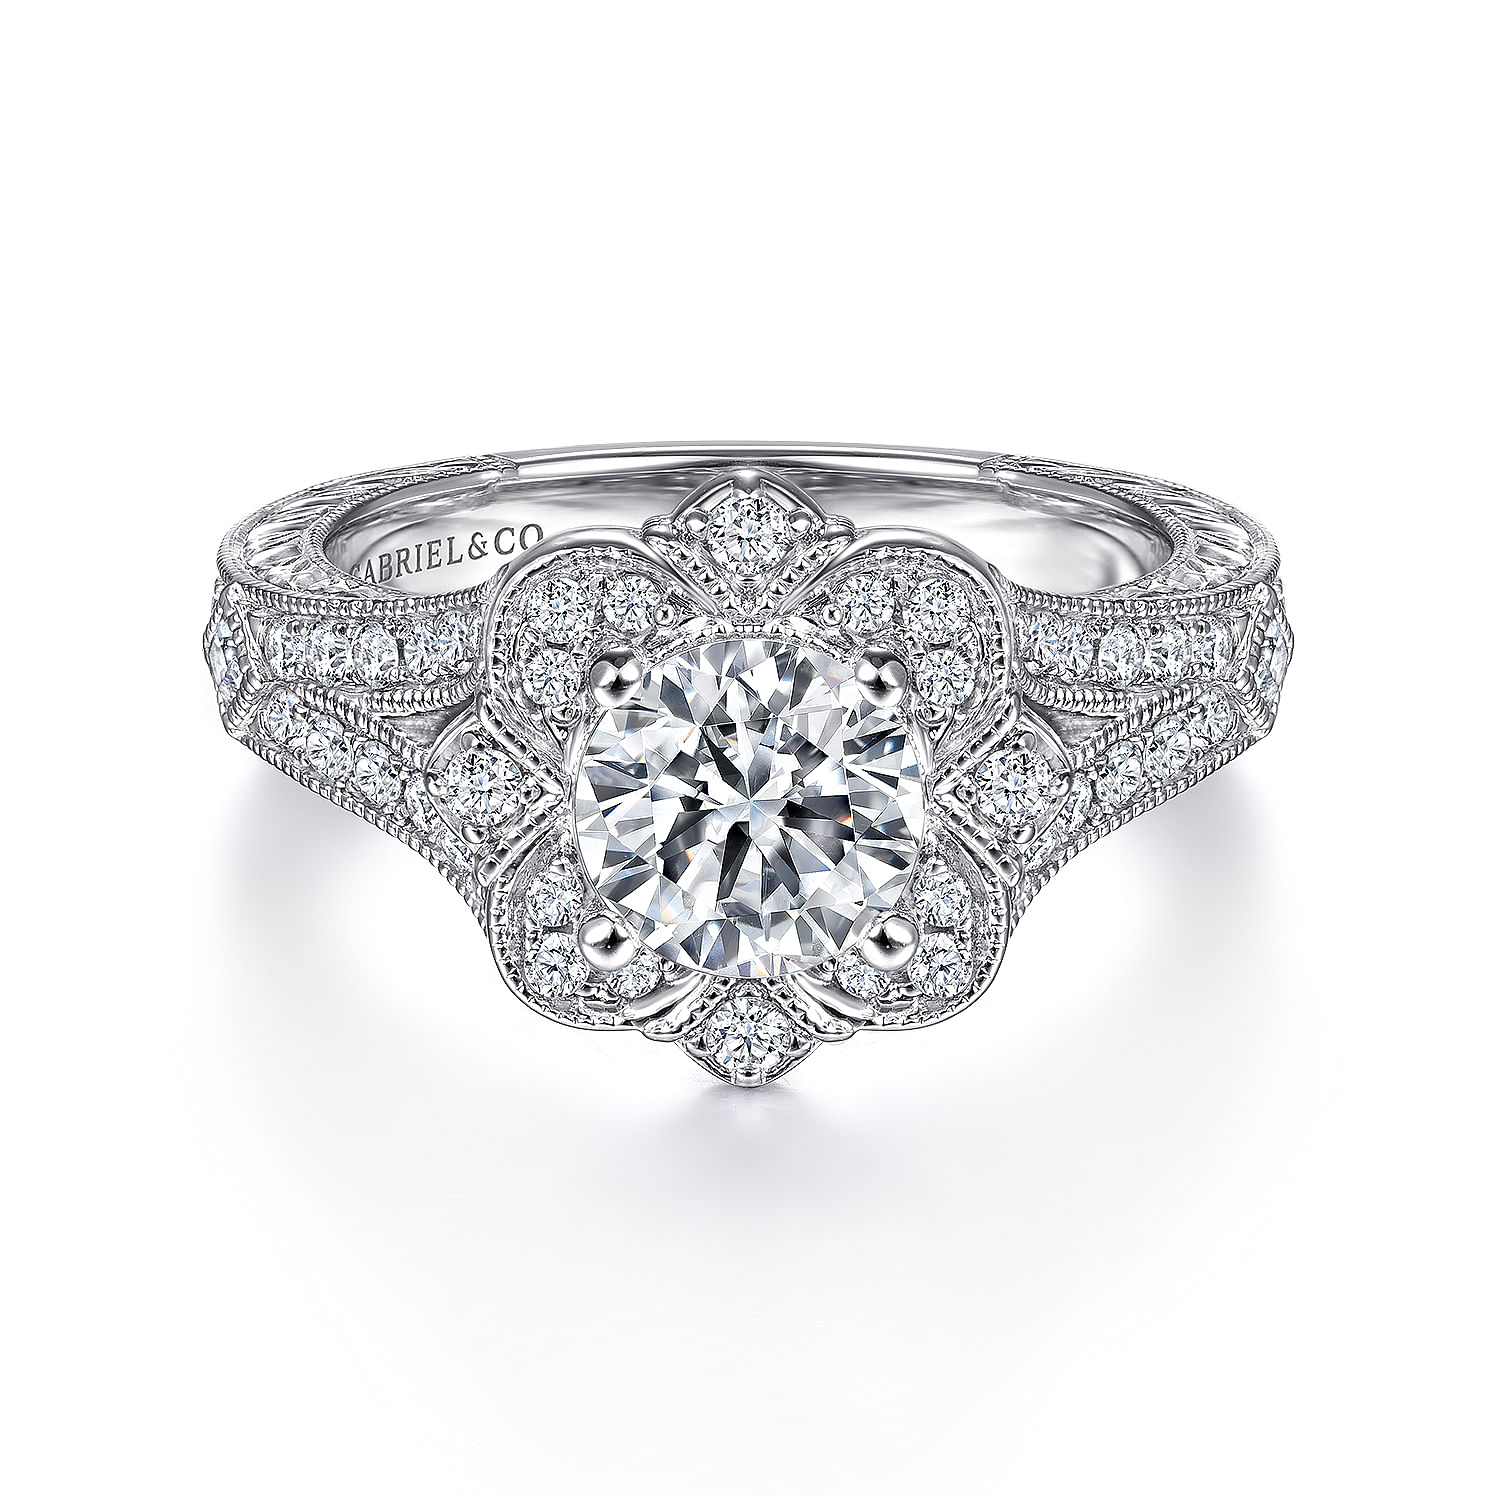 Cornelia - Vintage Inspired 14K White Gold Round Halo Diamond Engagement Ring